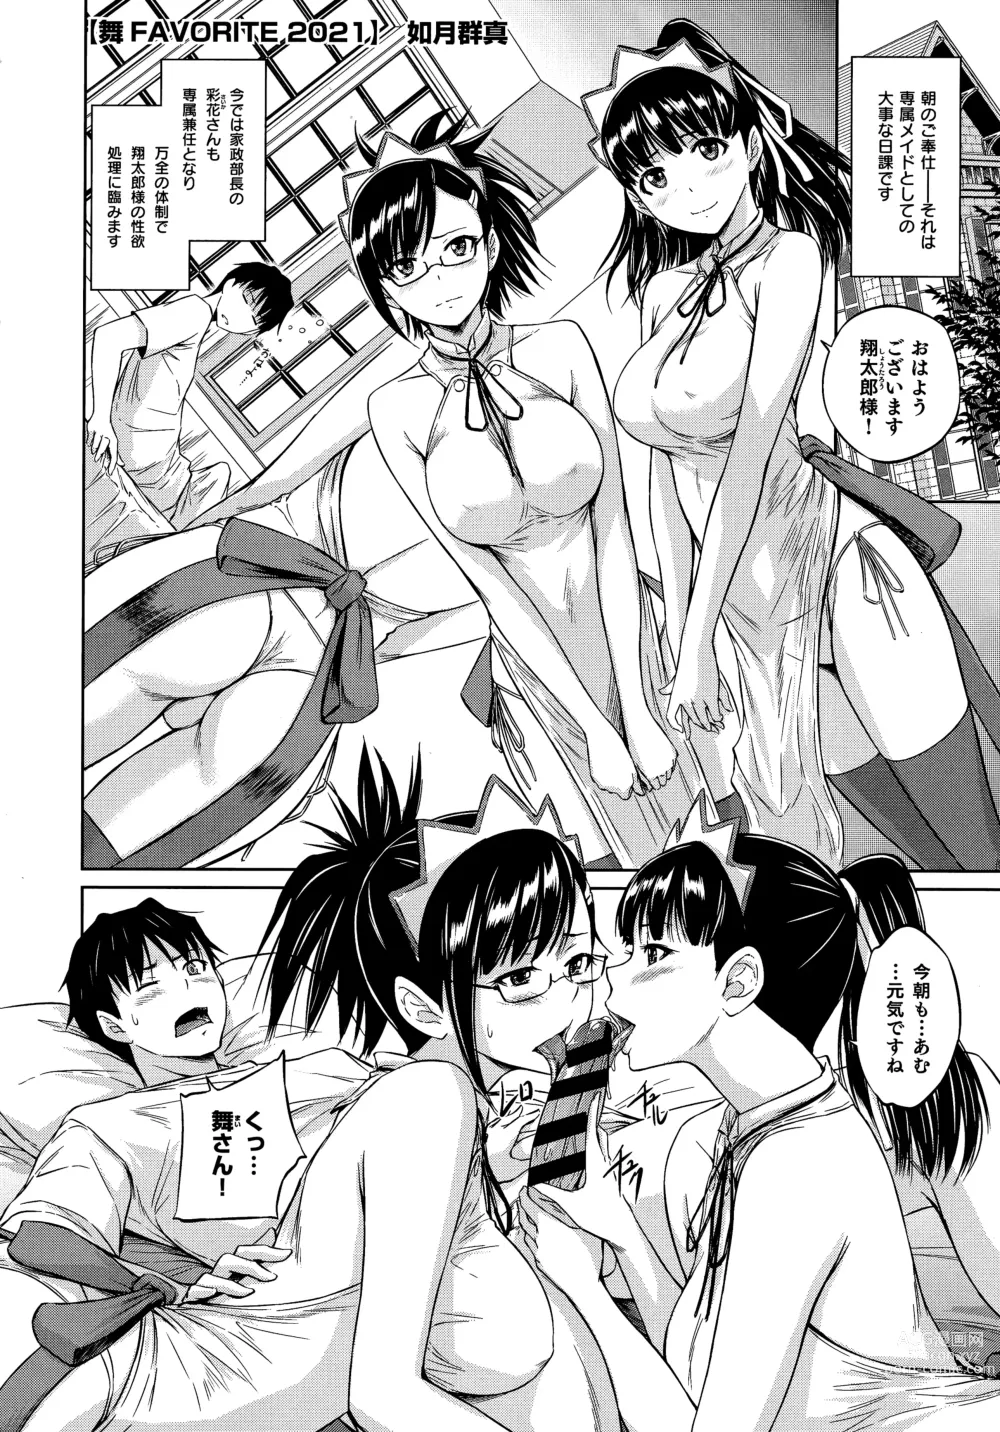 Page 1 of manga Mai Favorite 2021